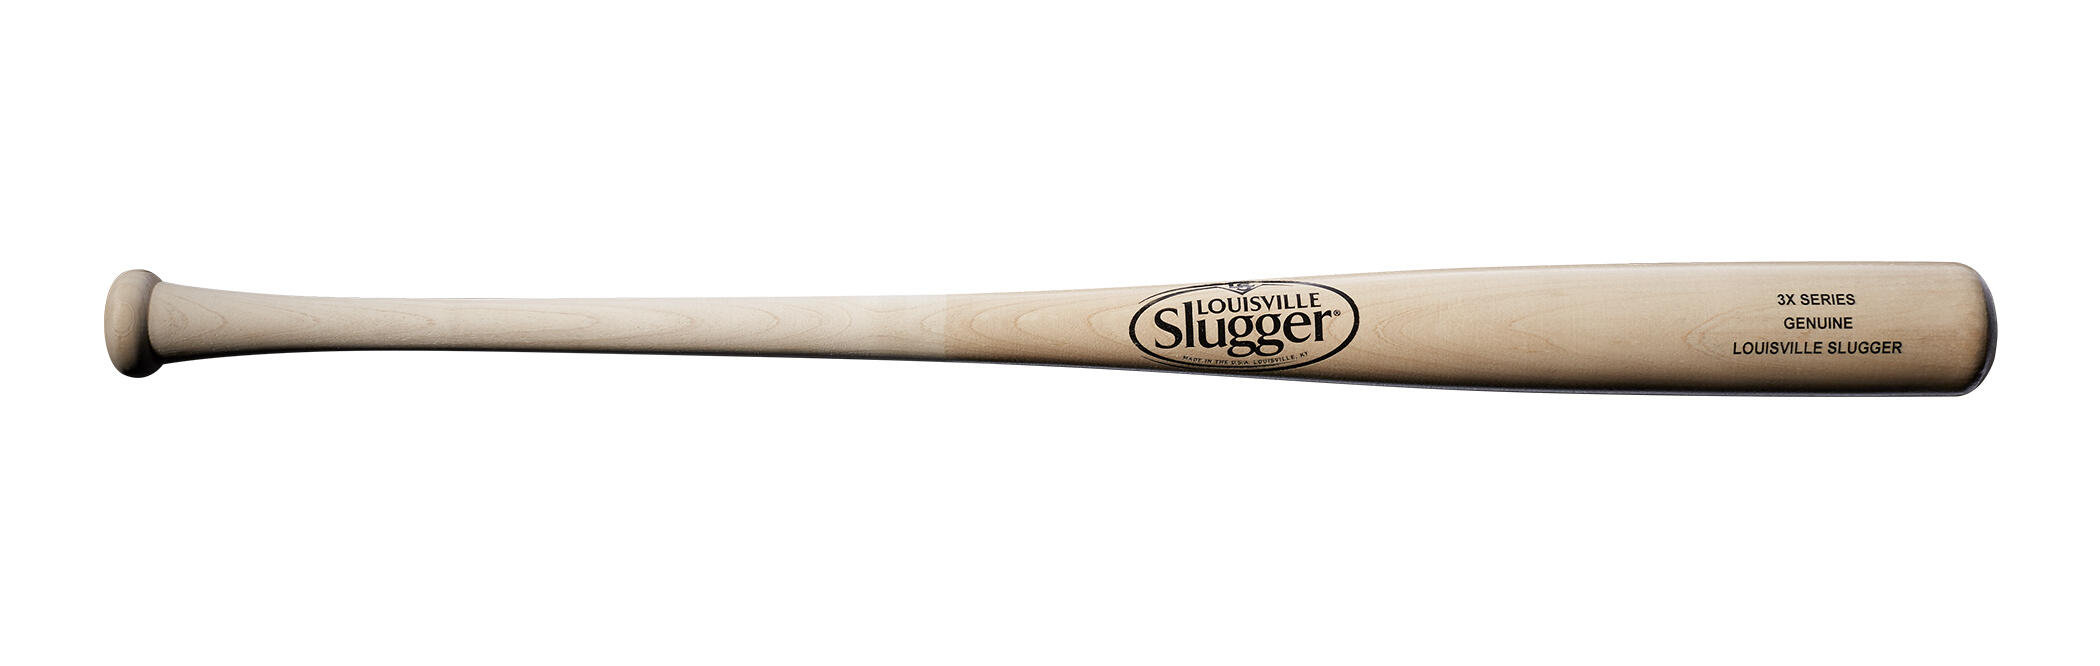 Louisville Slugger Genuine S3 Wood 33" Baseball Bat - Natural 2/4